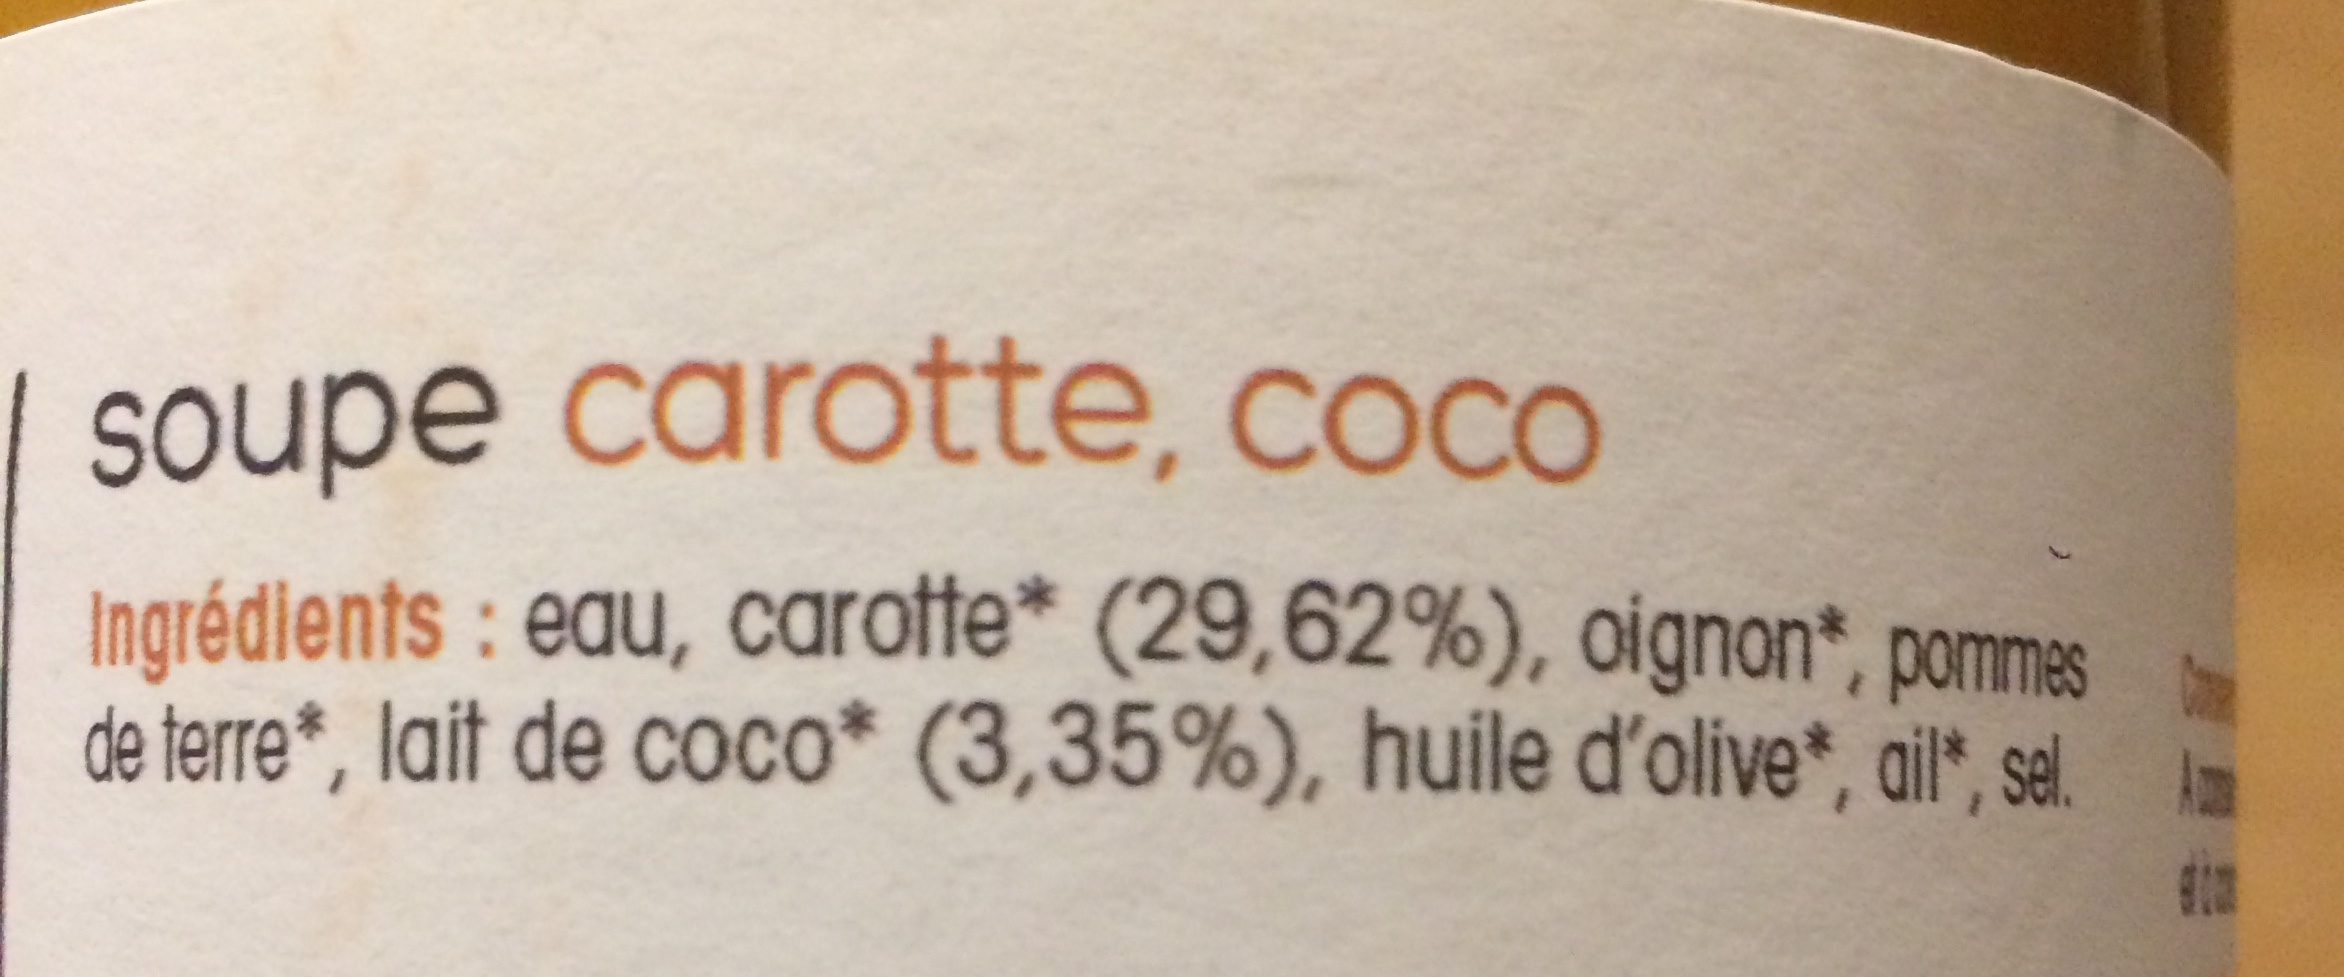 Soupe carotte,coco - Ingredienser - fr